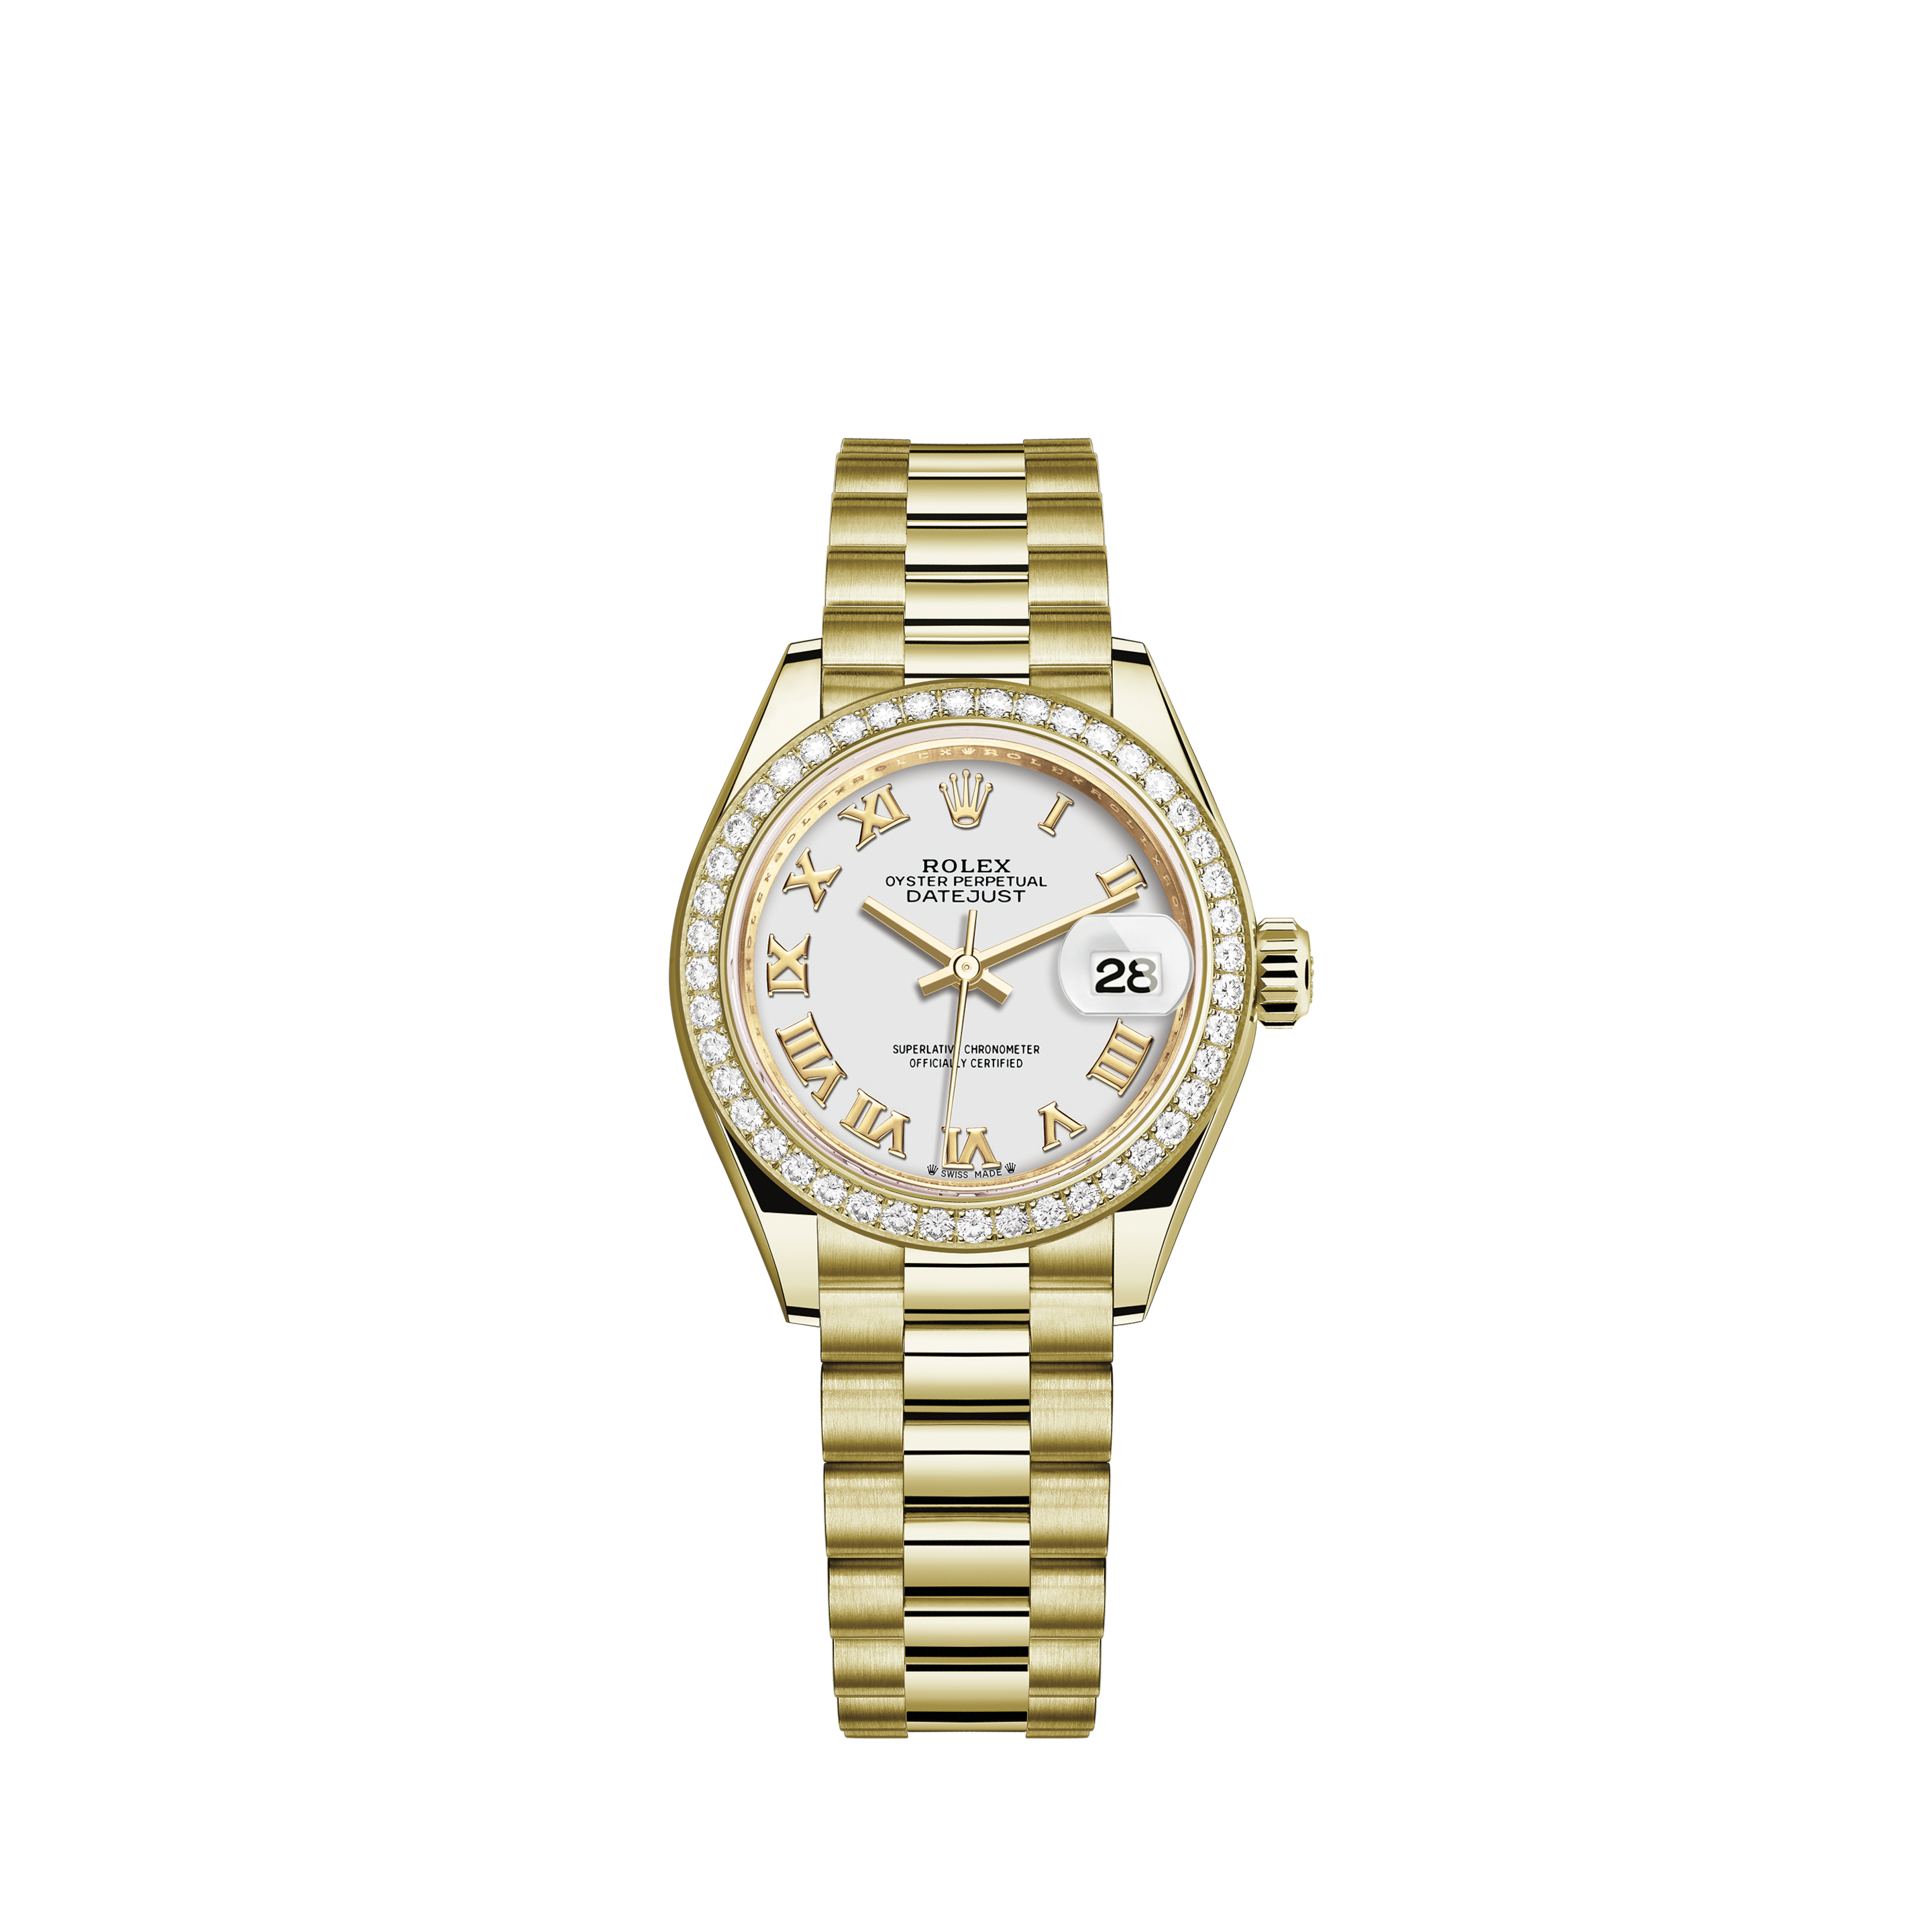 Rolex Women's New Style Two-Tone Datejust with Custom Diamond Bezel and White Diamond Dial